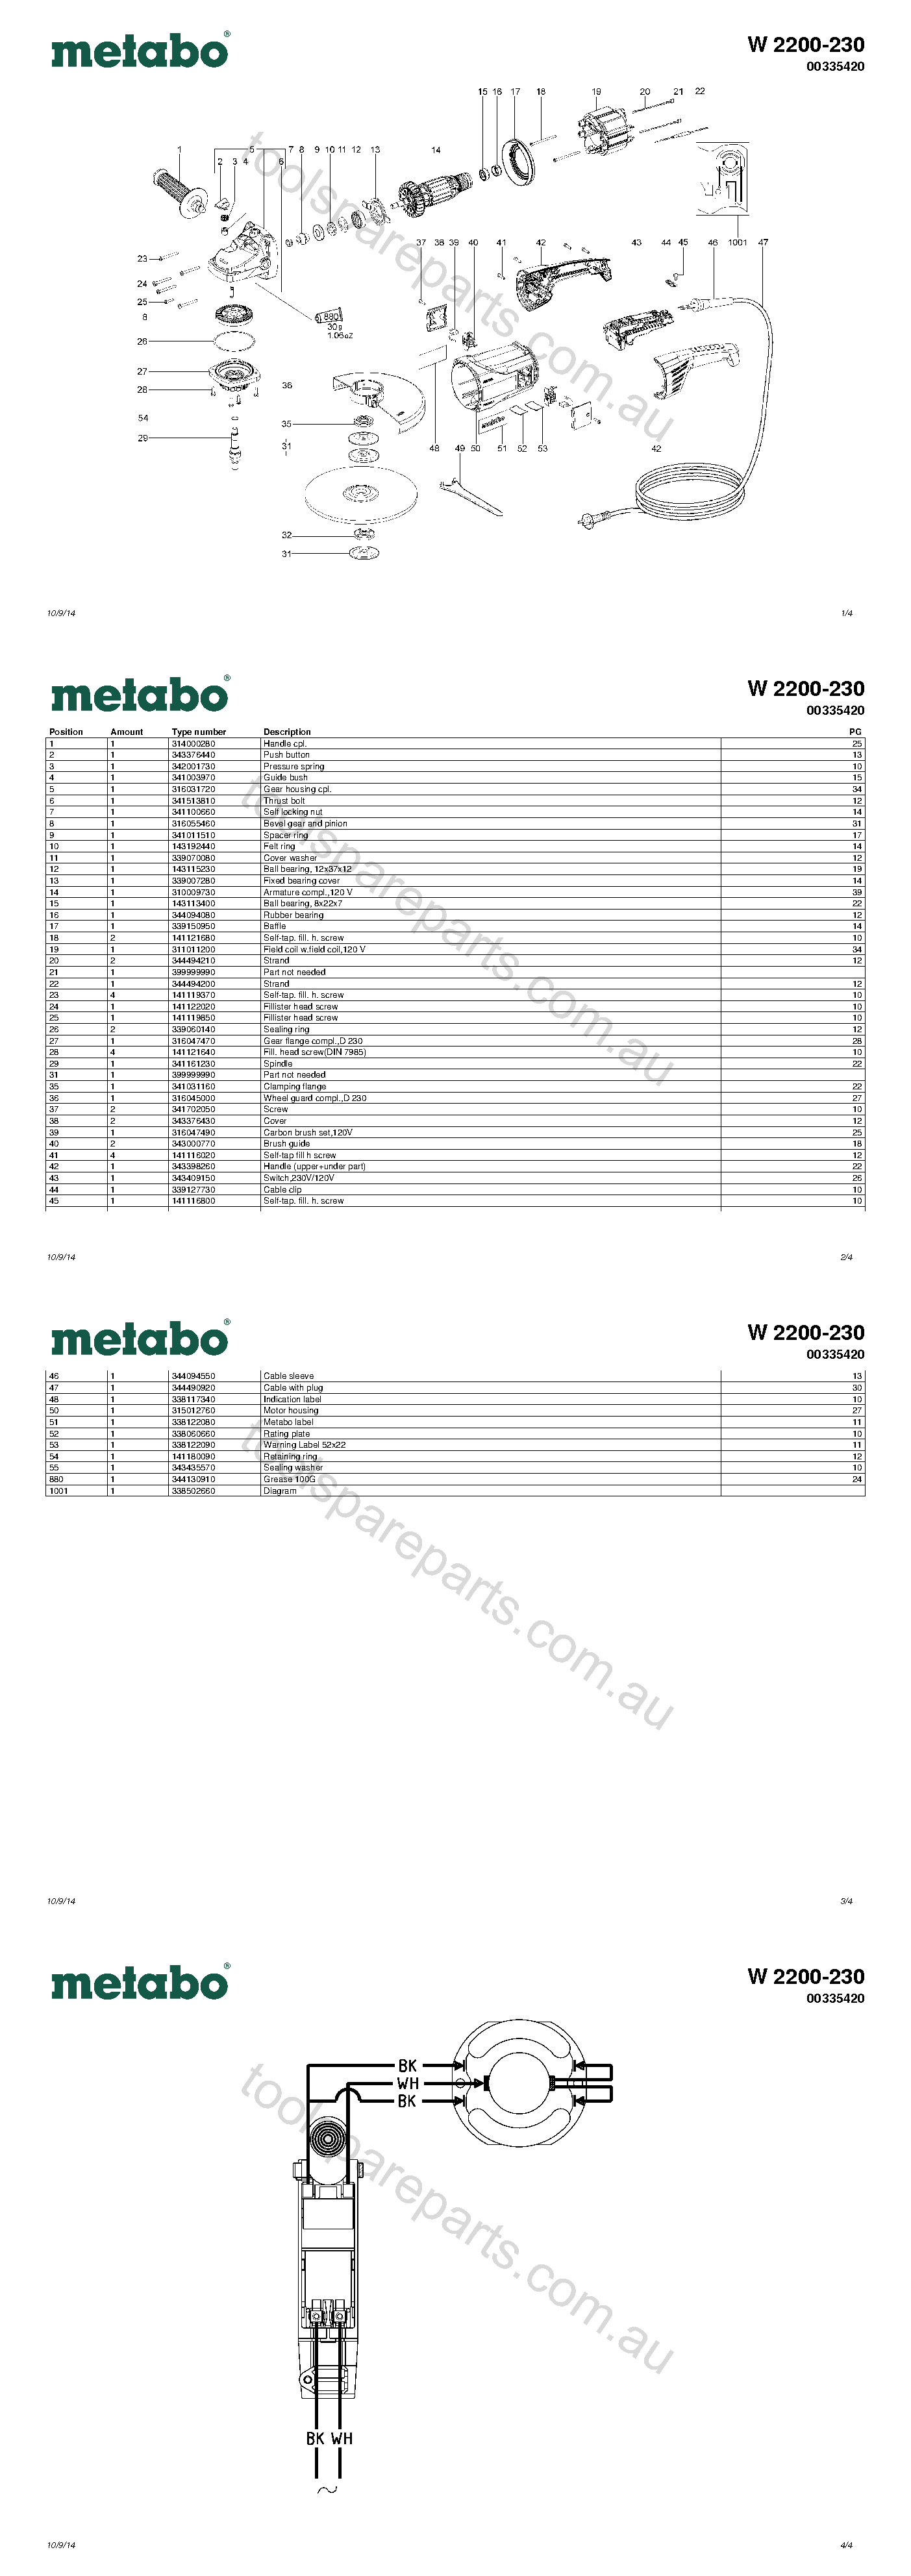 Metabo W 2200-230 00335420  Diagram 1